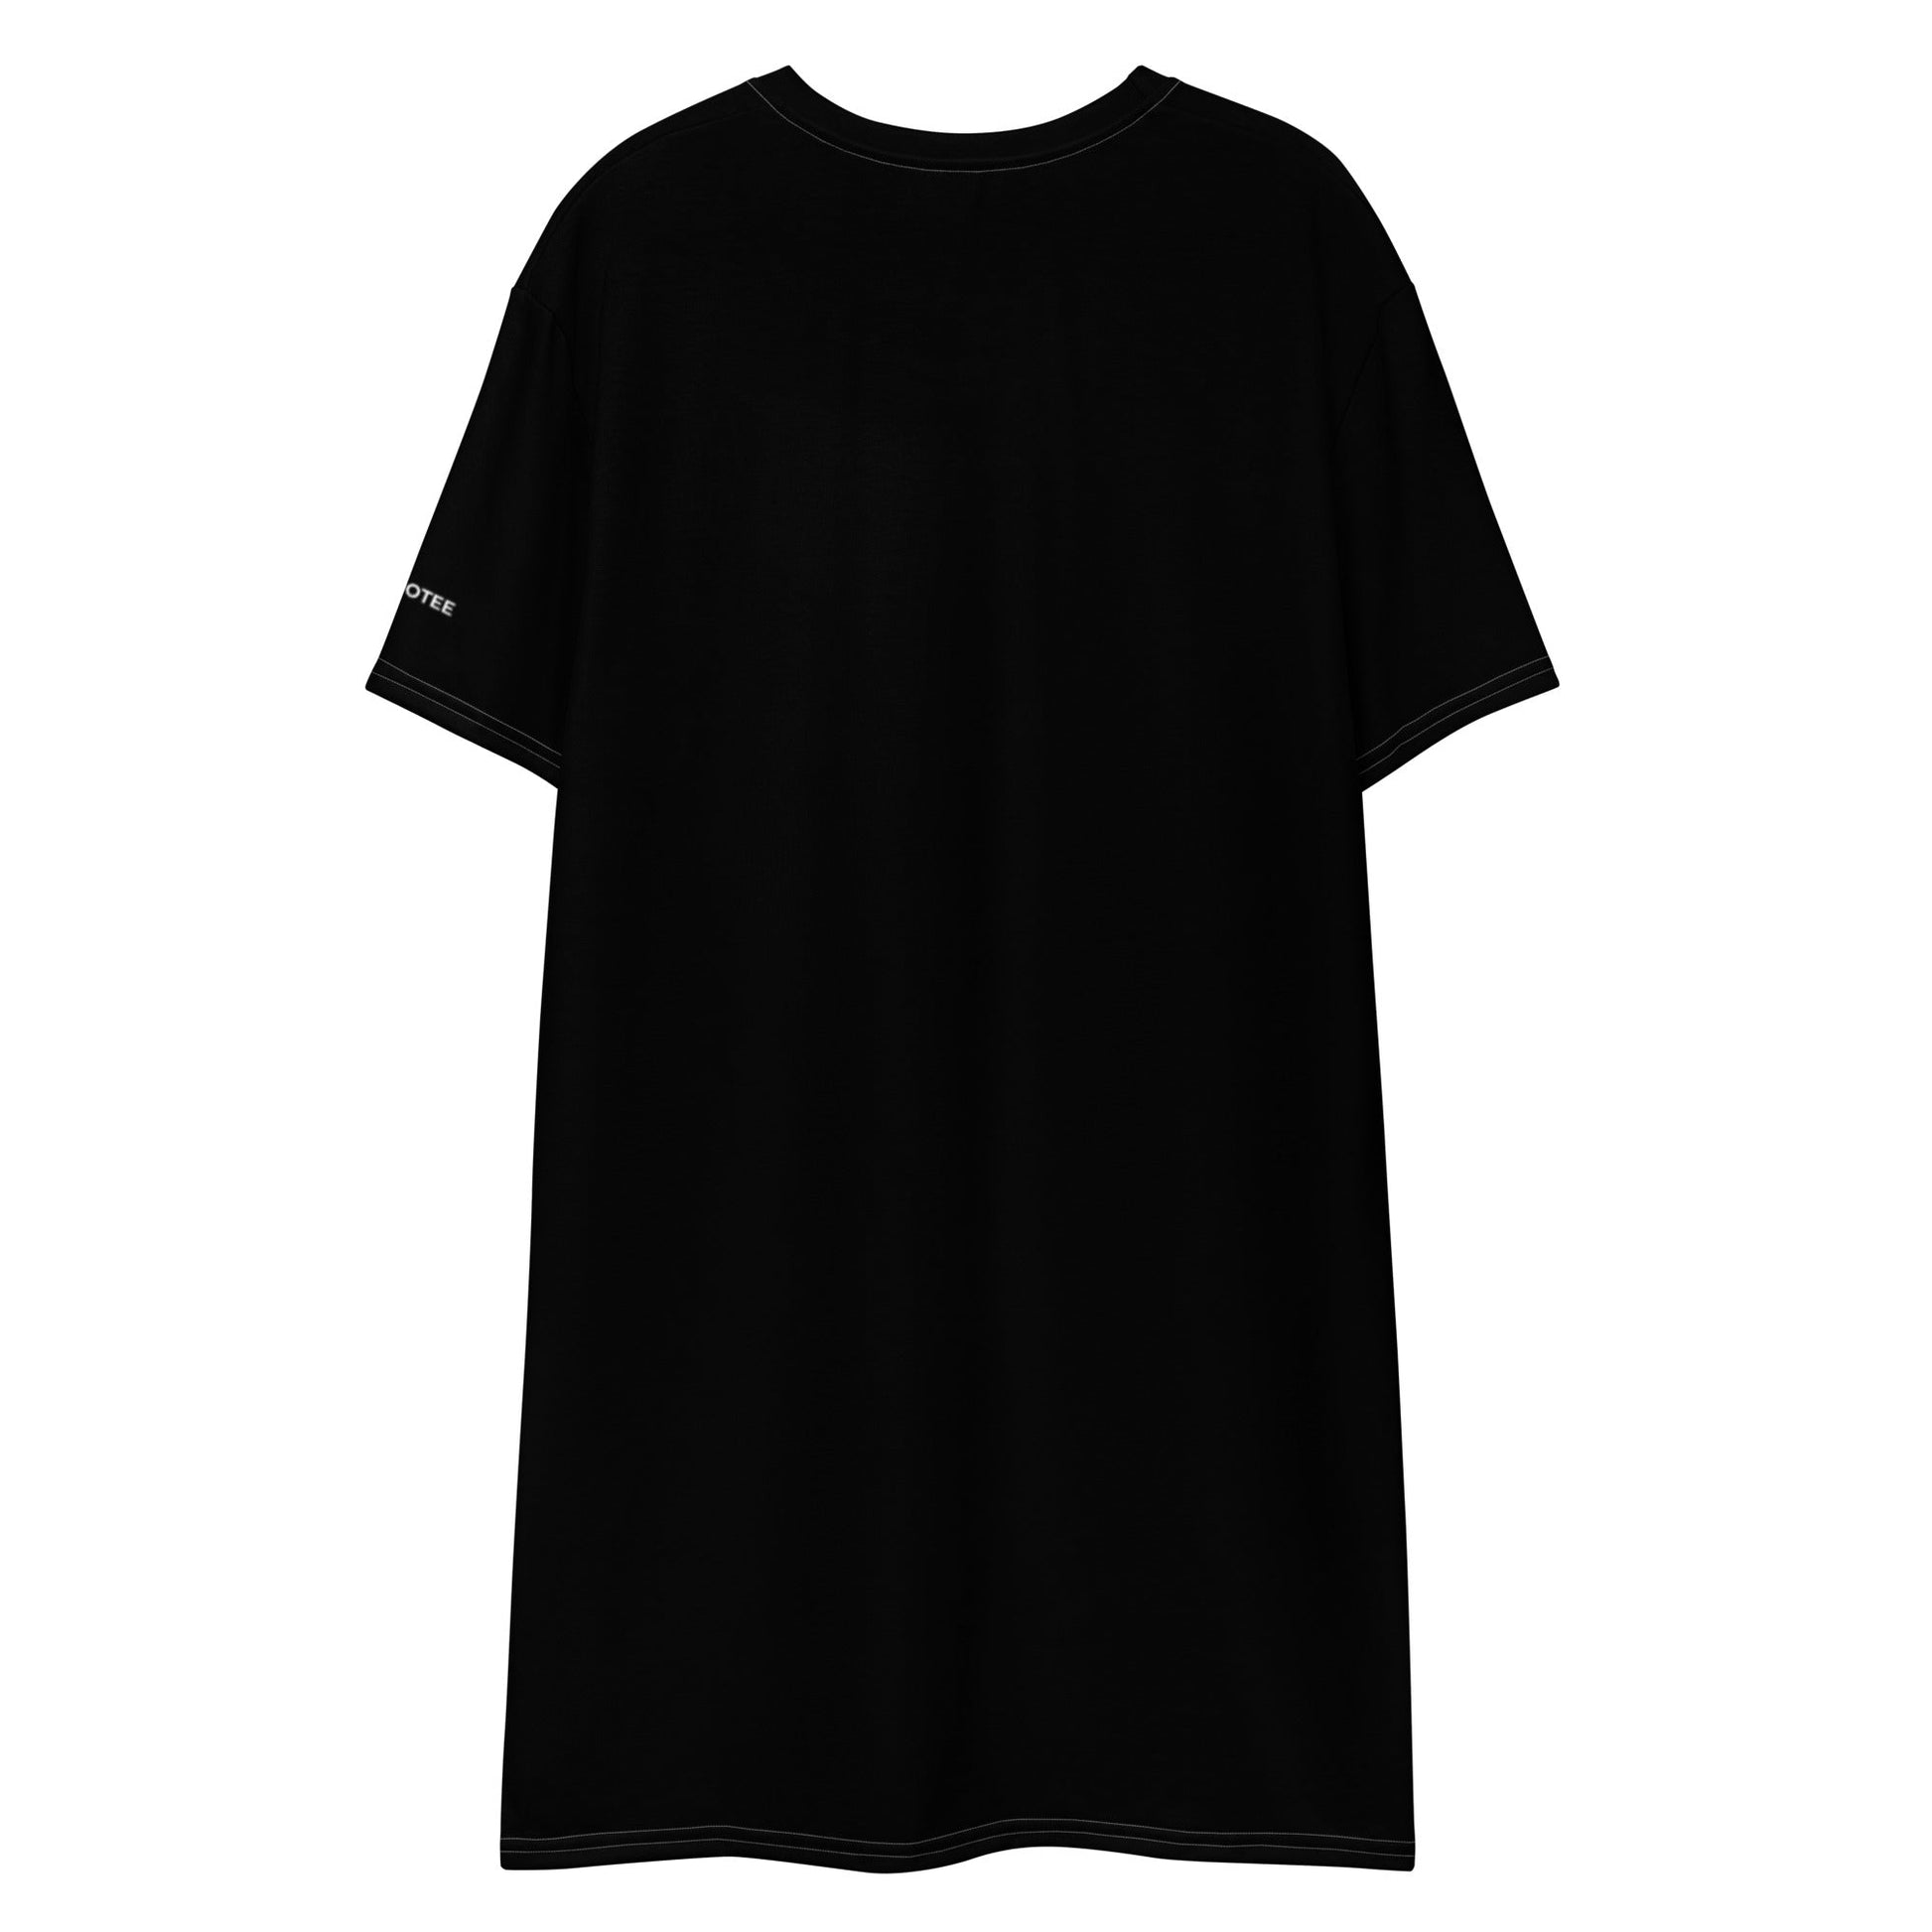 Women's T-shirt dress - Bonotee